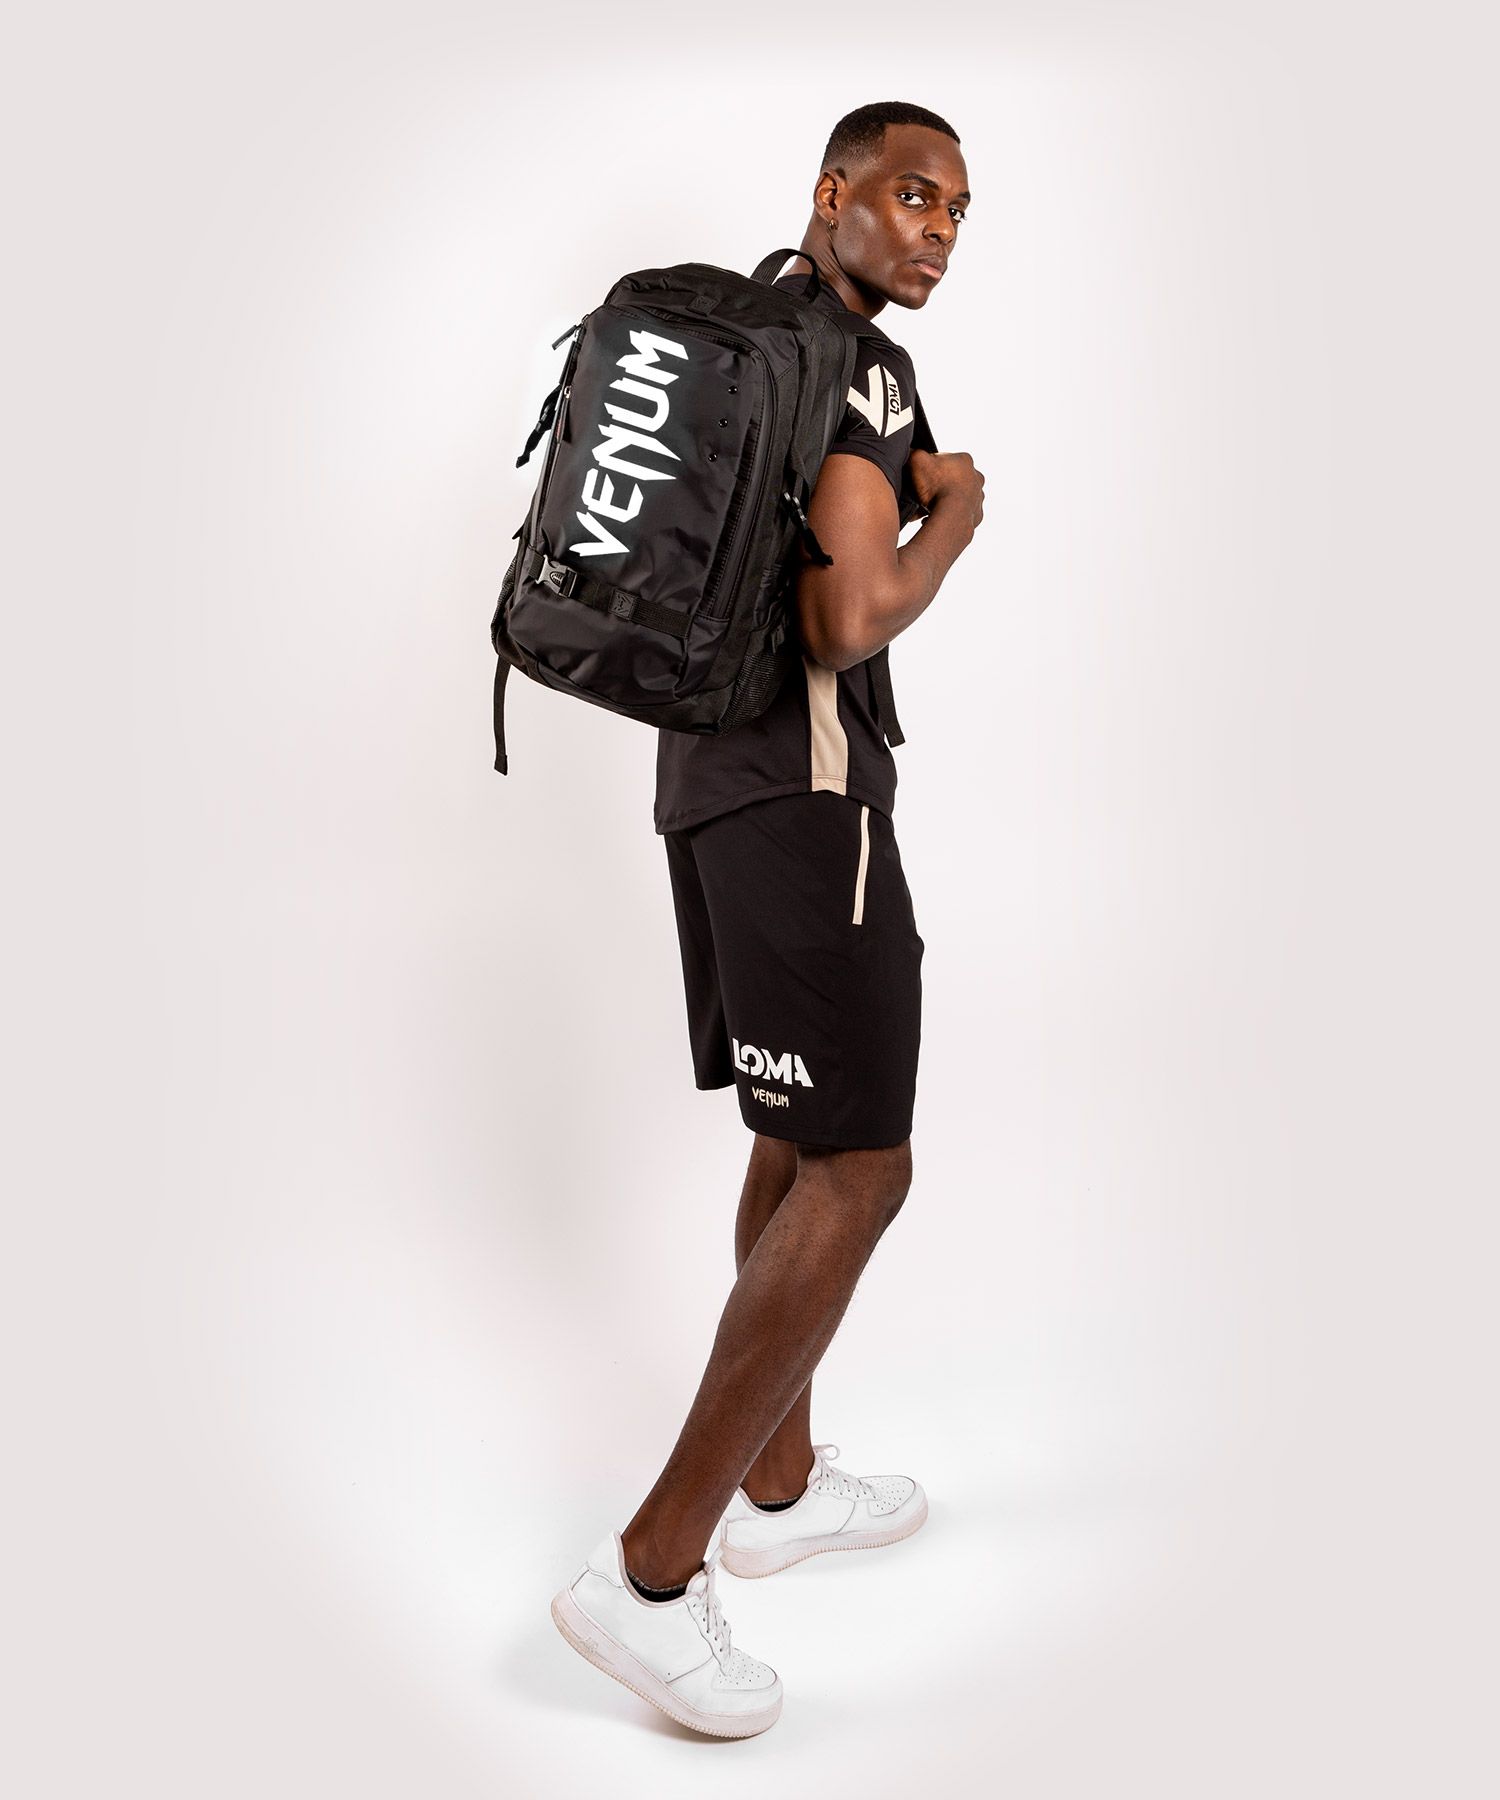 VENUM Challenger Pro Evo Backpack - Black/White